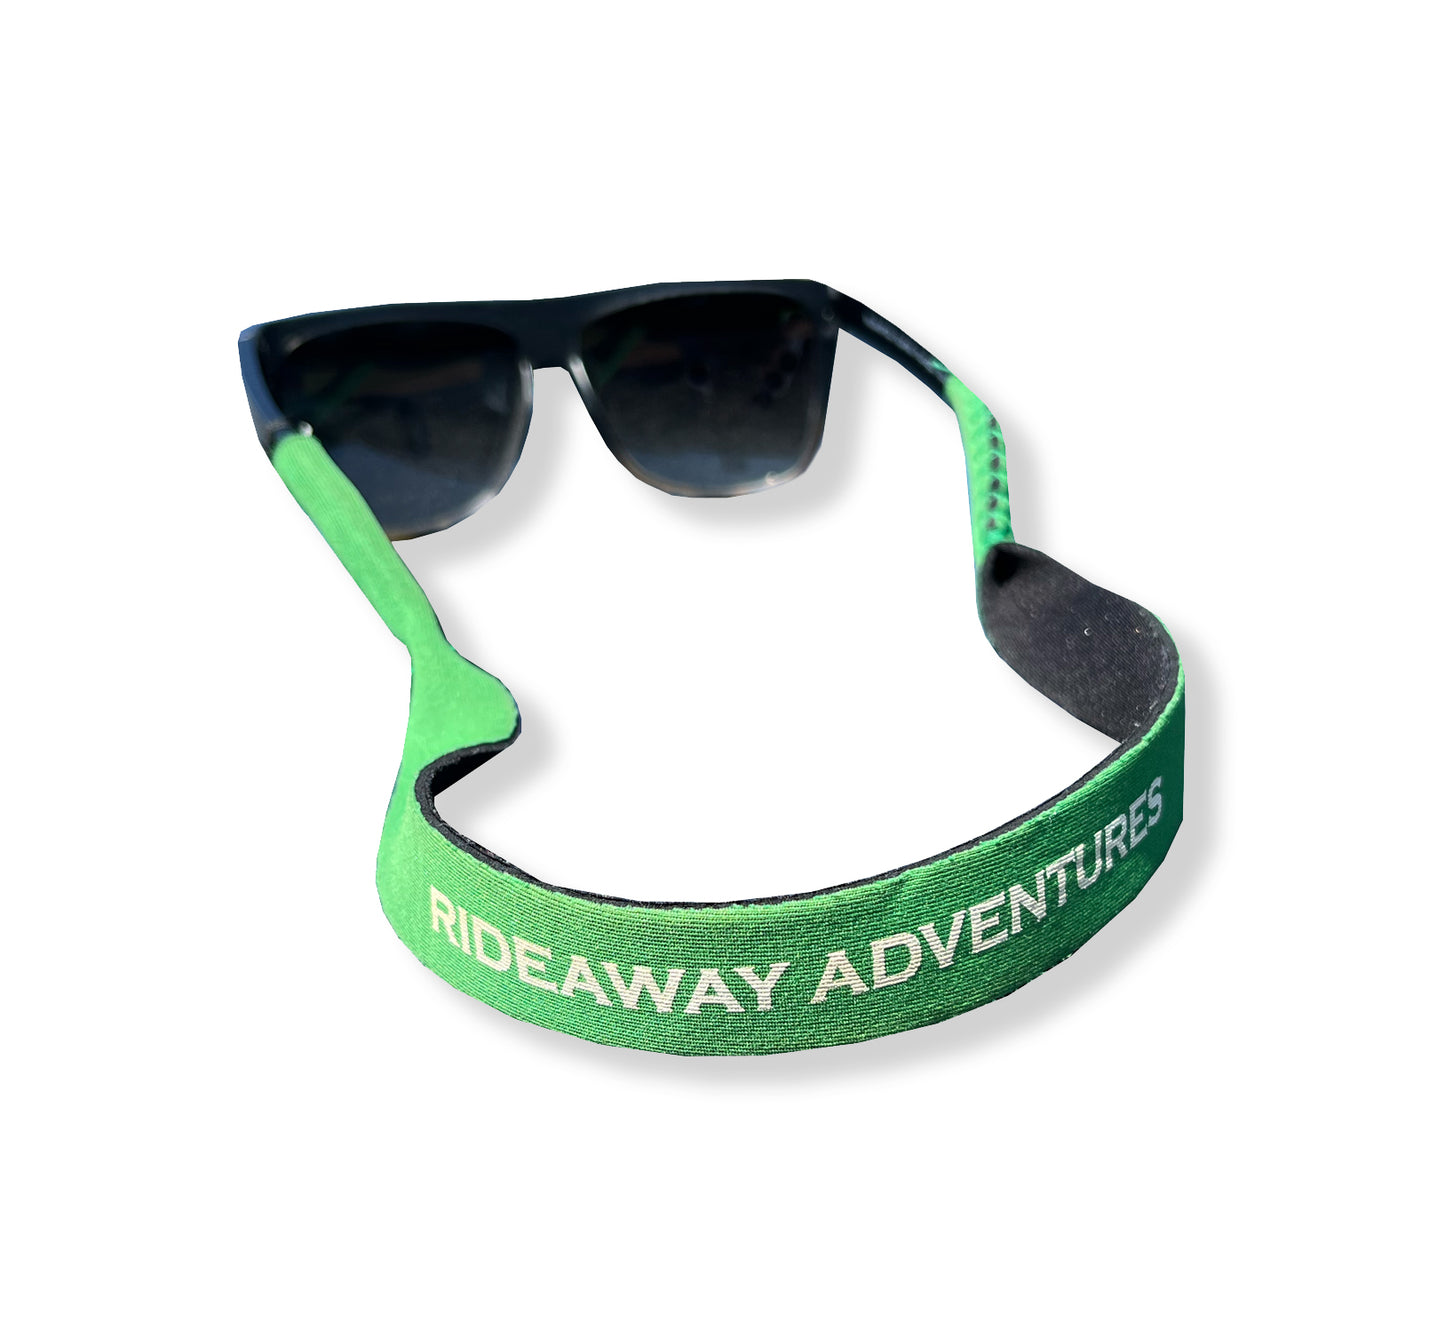 RideAway Adventures Sunglass Croakies